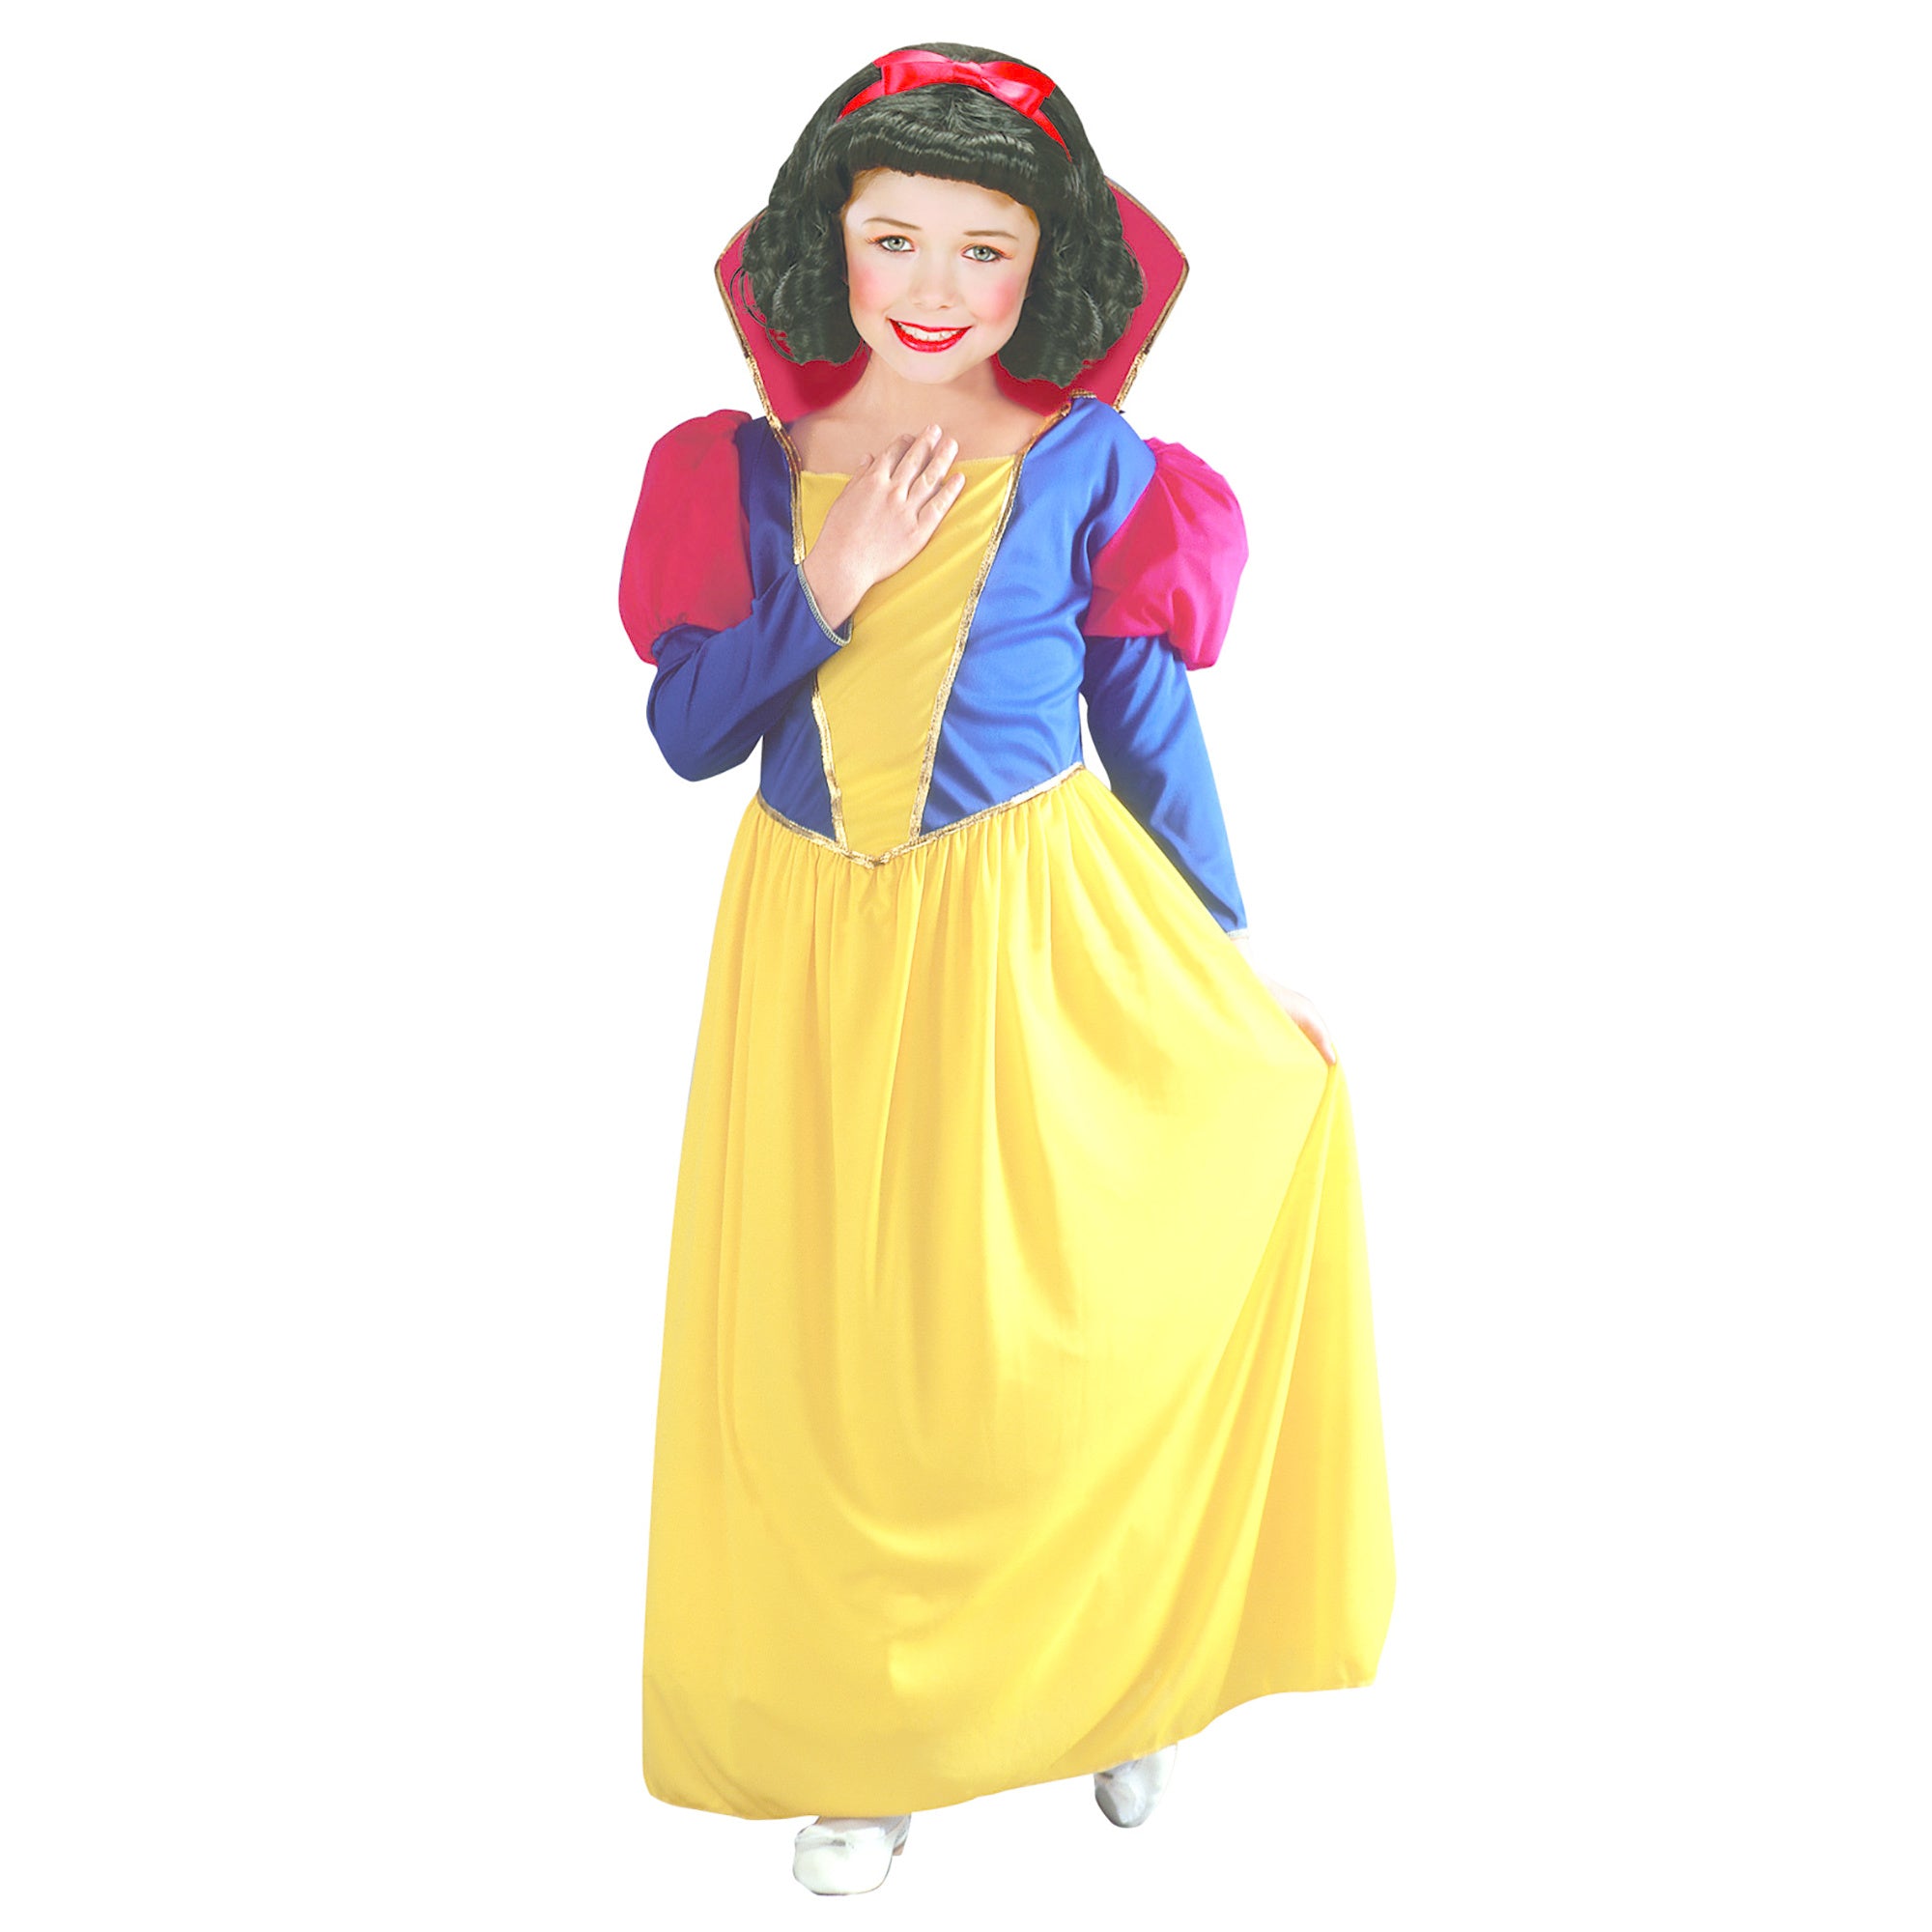 Widmann - Sneeuwwitje Kostuum - Prinses Sneeuwwitje Kostuum Meisje - blauw,rood,geel - Maat 158 - Carnavalskleding - Verkleedkleding